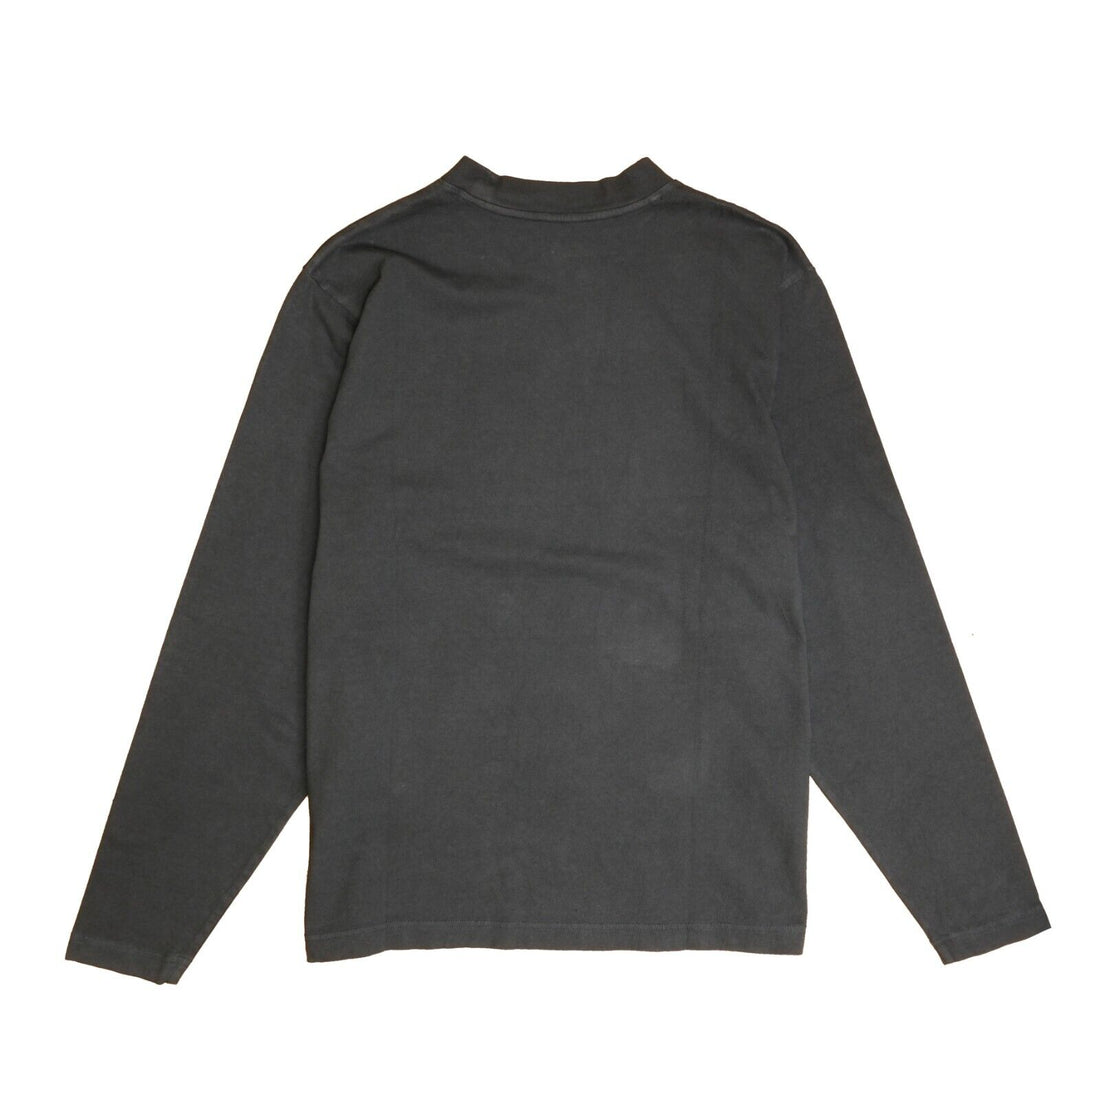 Yeezy Gap Unreleased Long Sleeve T-Shirt Size Small Black